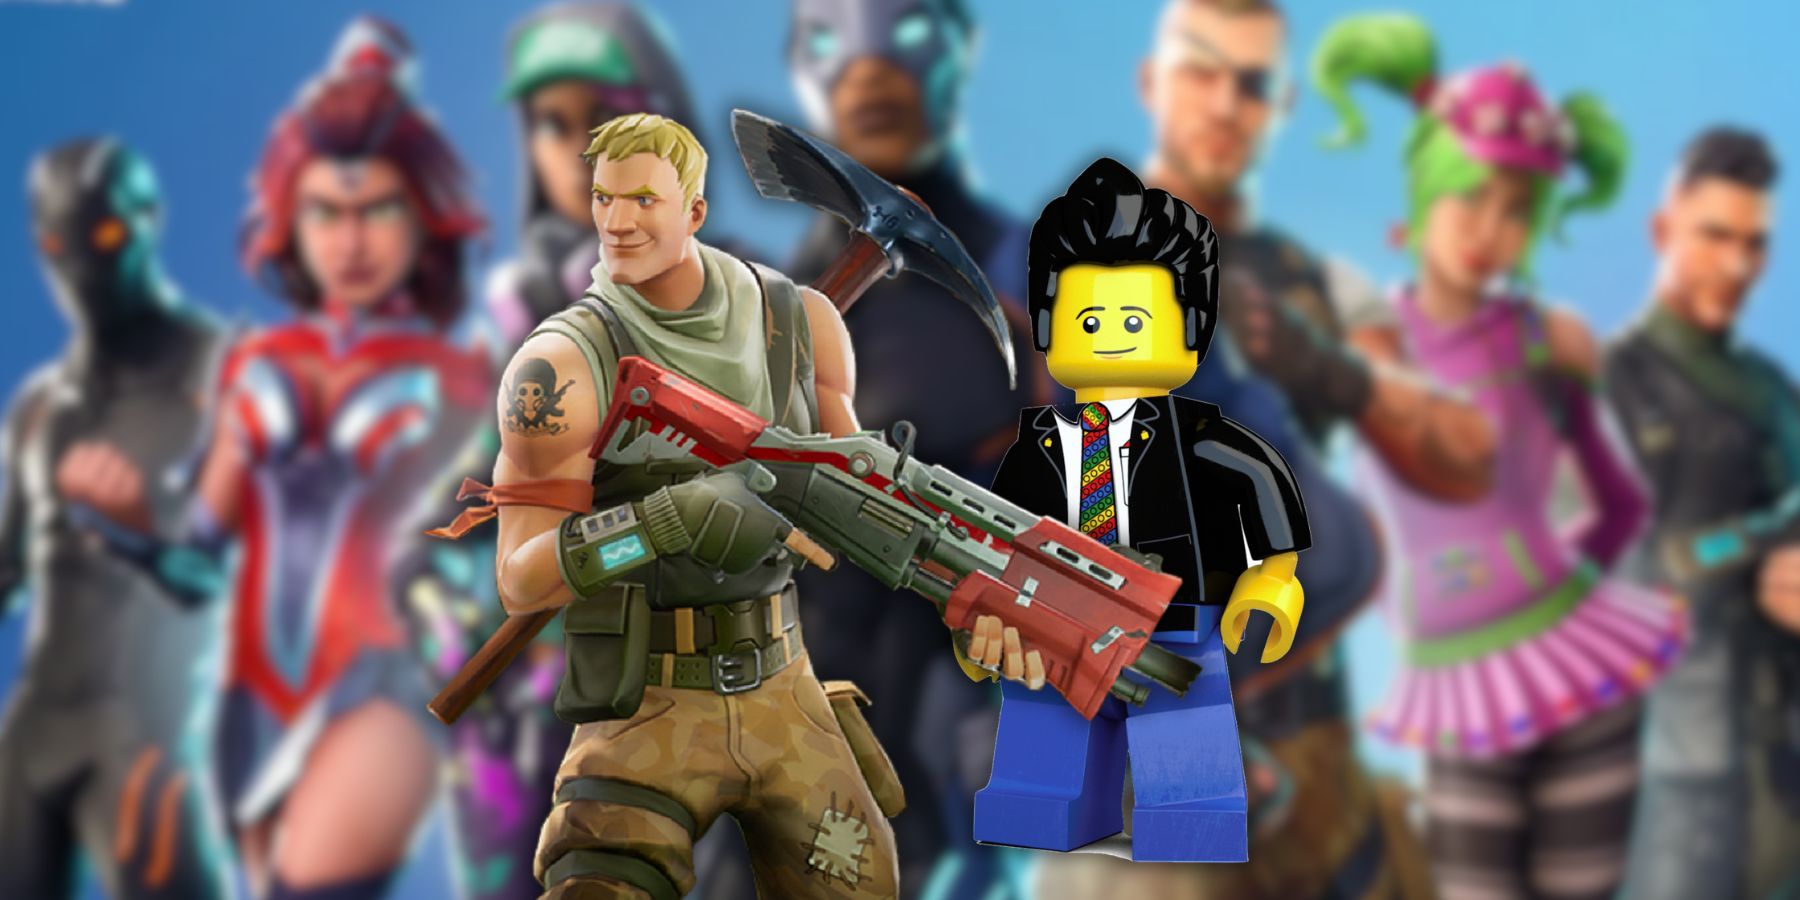 Brick Rick, Lego x Fortnite crossover skin concept + a edit style